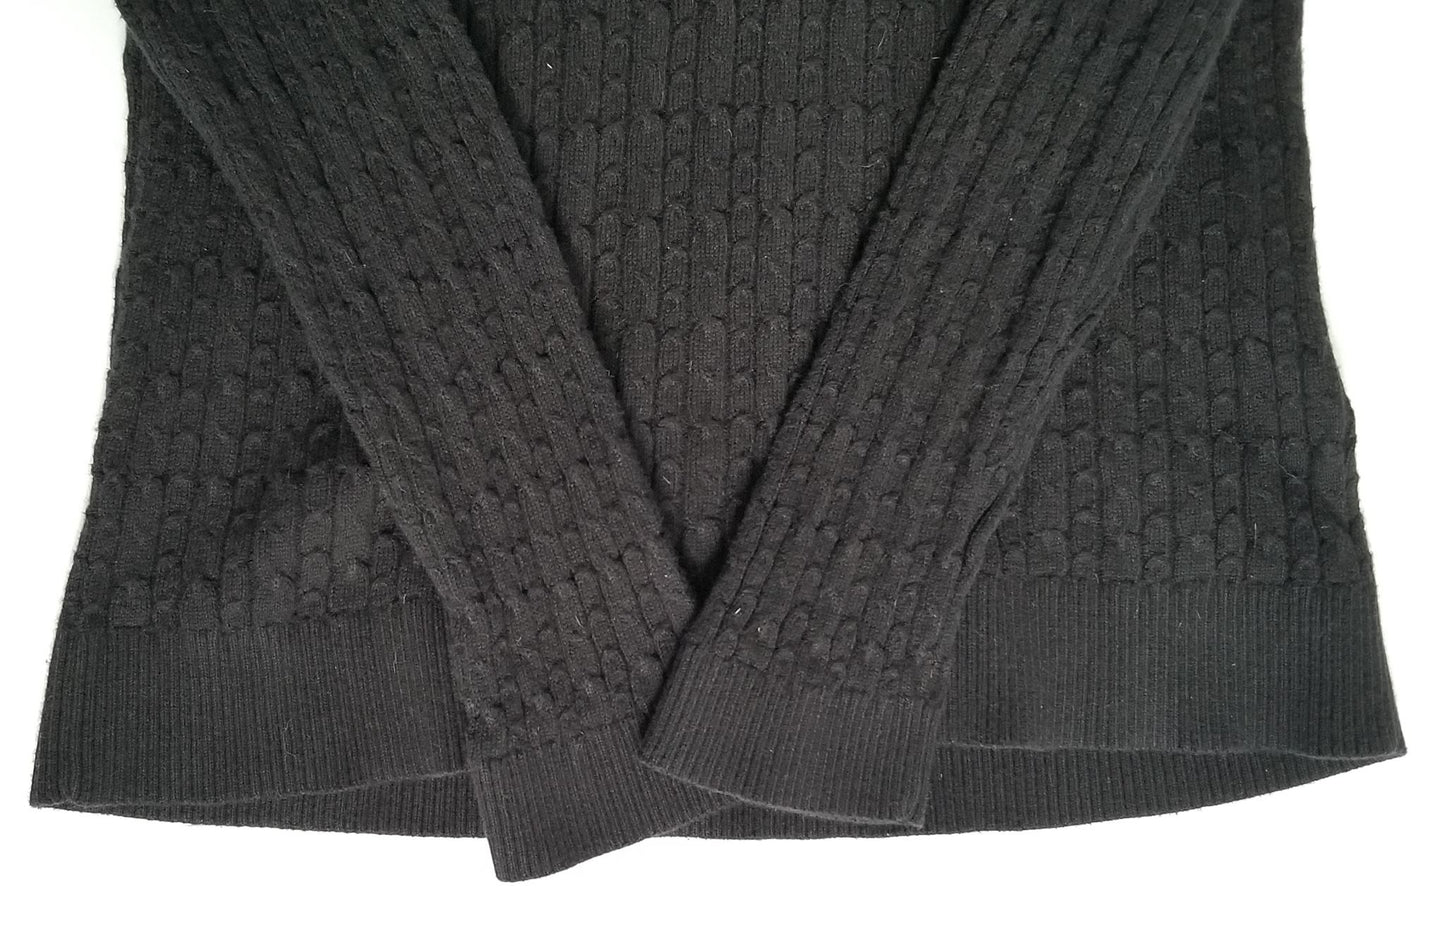 Tommy Hilfiger V Neck Cable Knit Sweater - Black - Medium